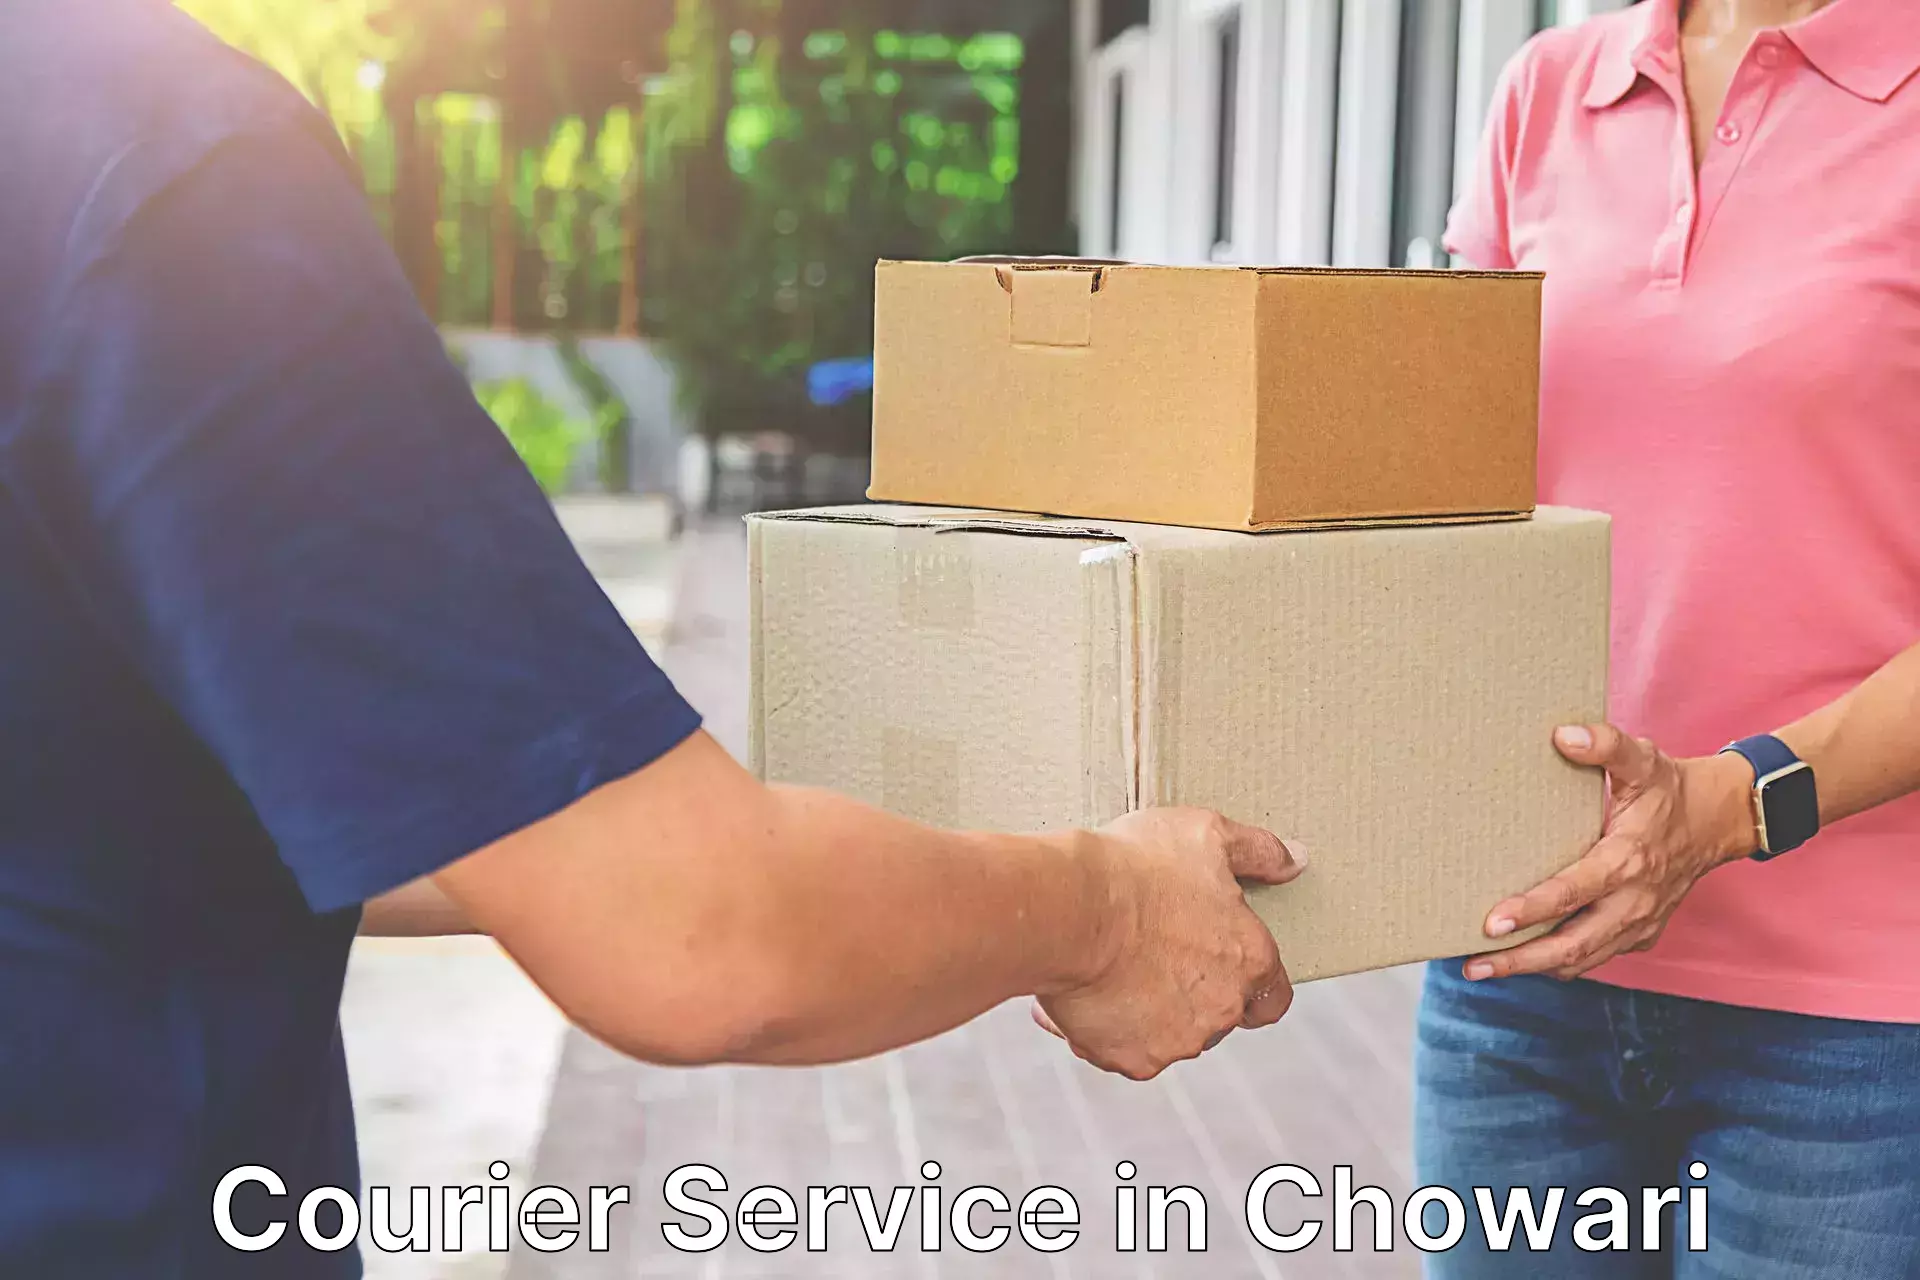 High-capacity shipping options in Chowari